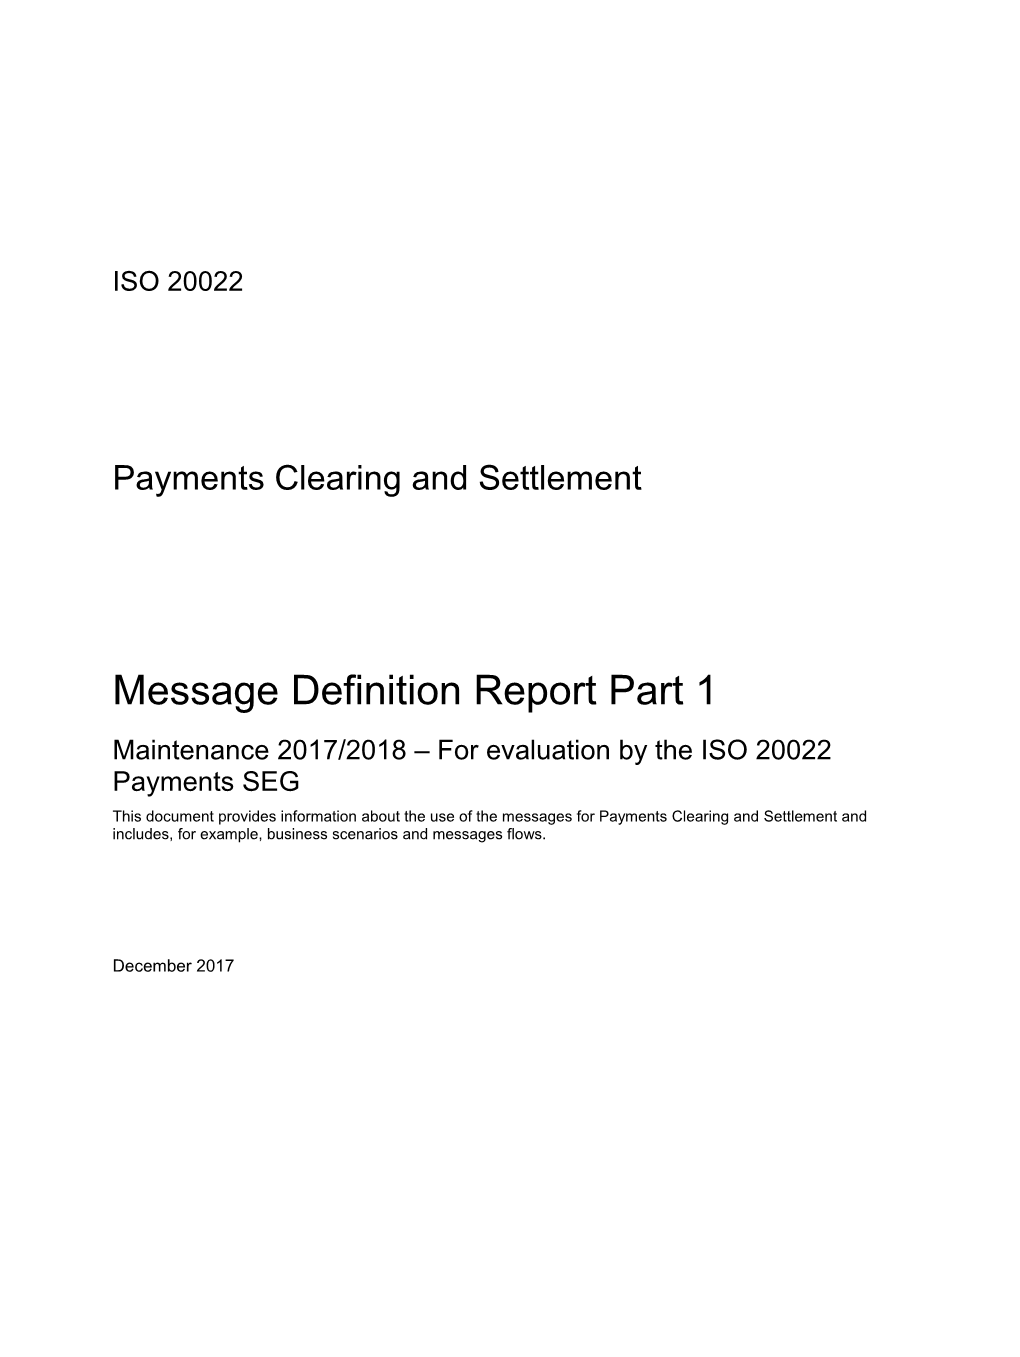 SR2017 MX Paymentsclearingandsettlement MDR1 Standards